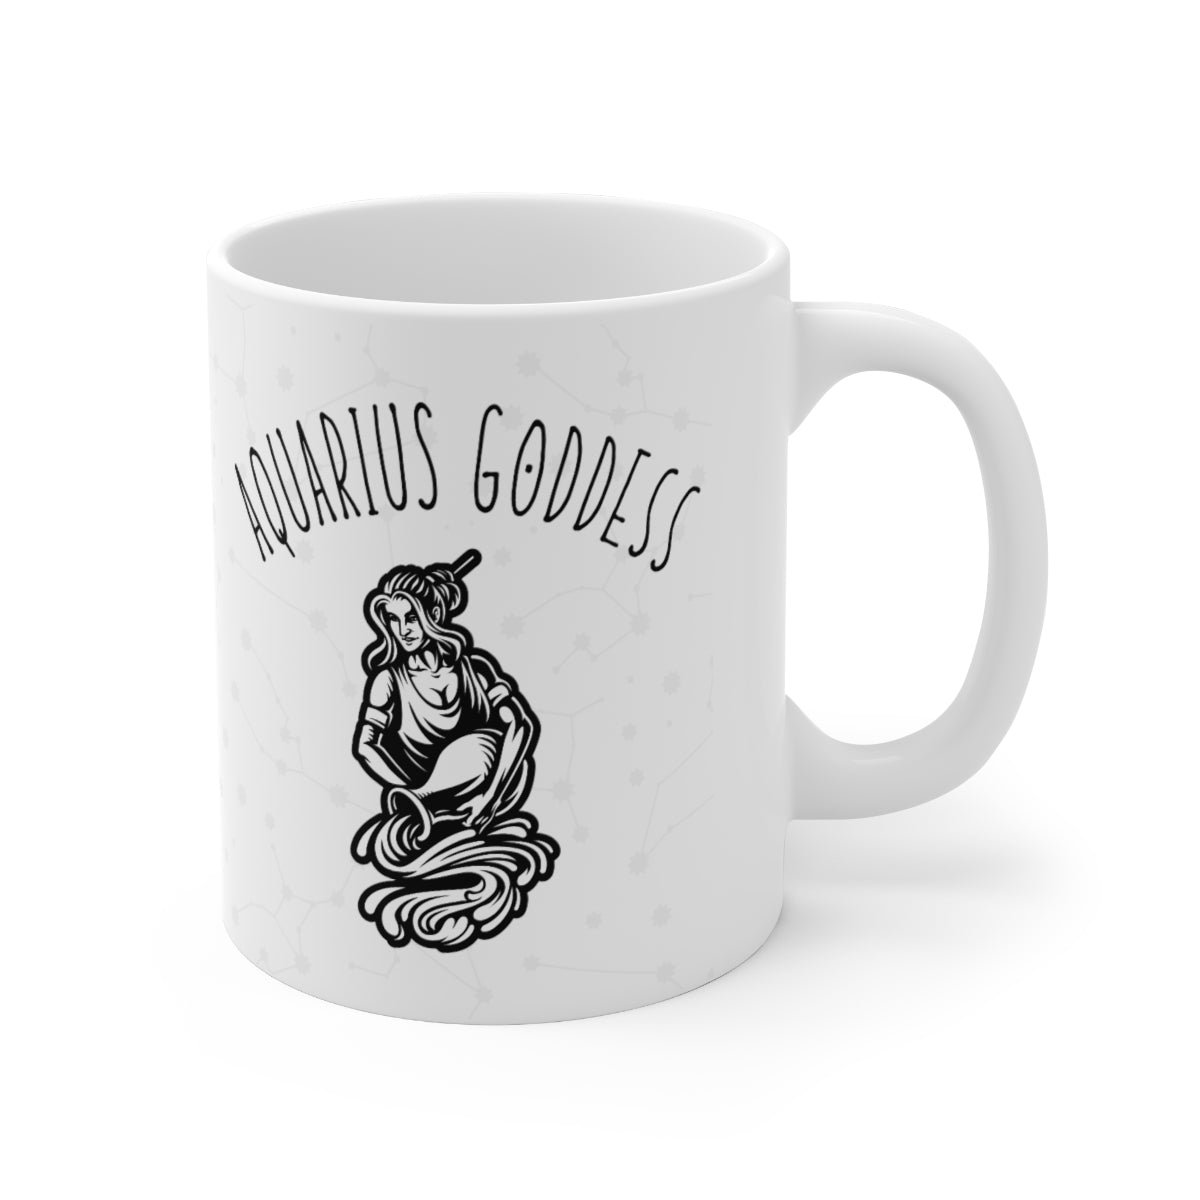 Aquarius Goddess Mug 4